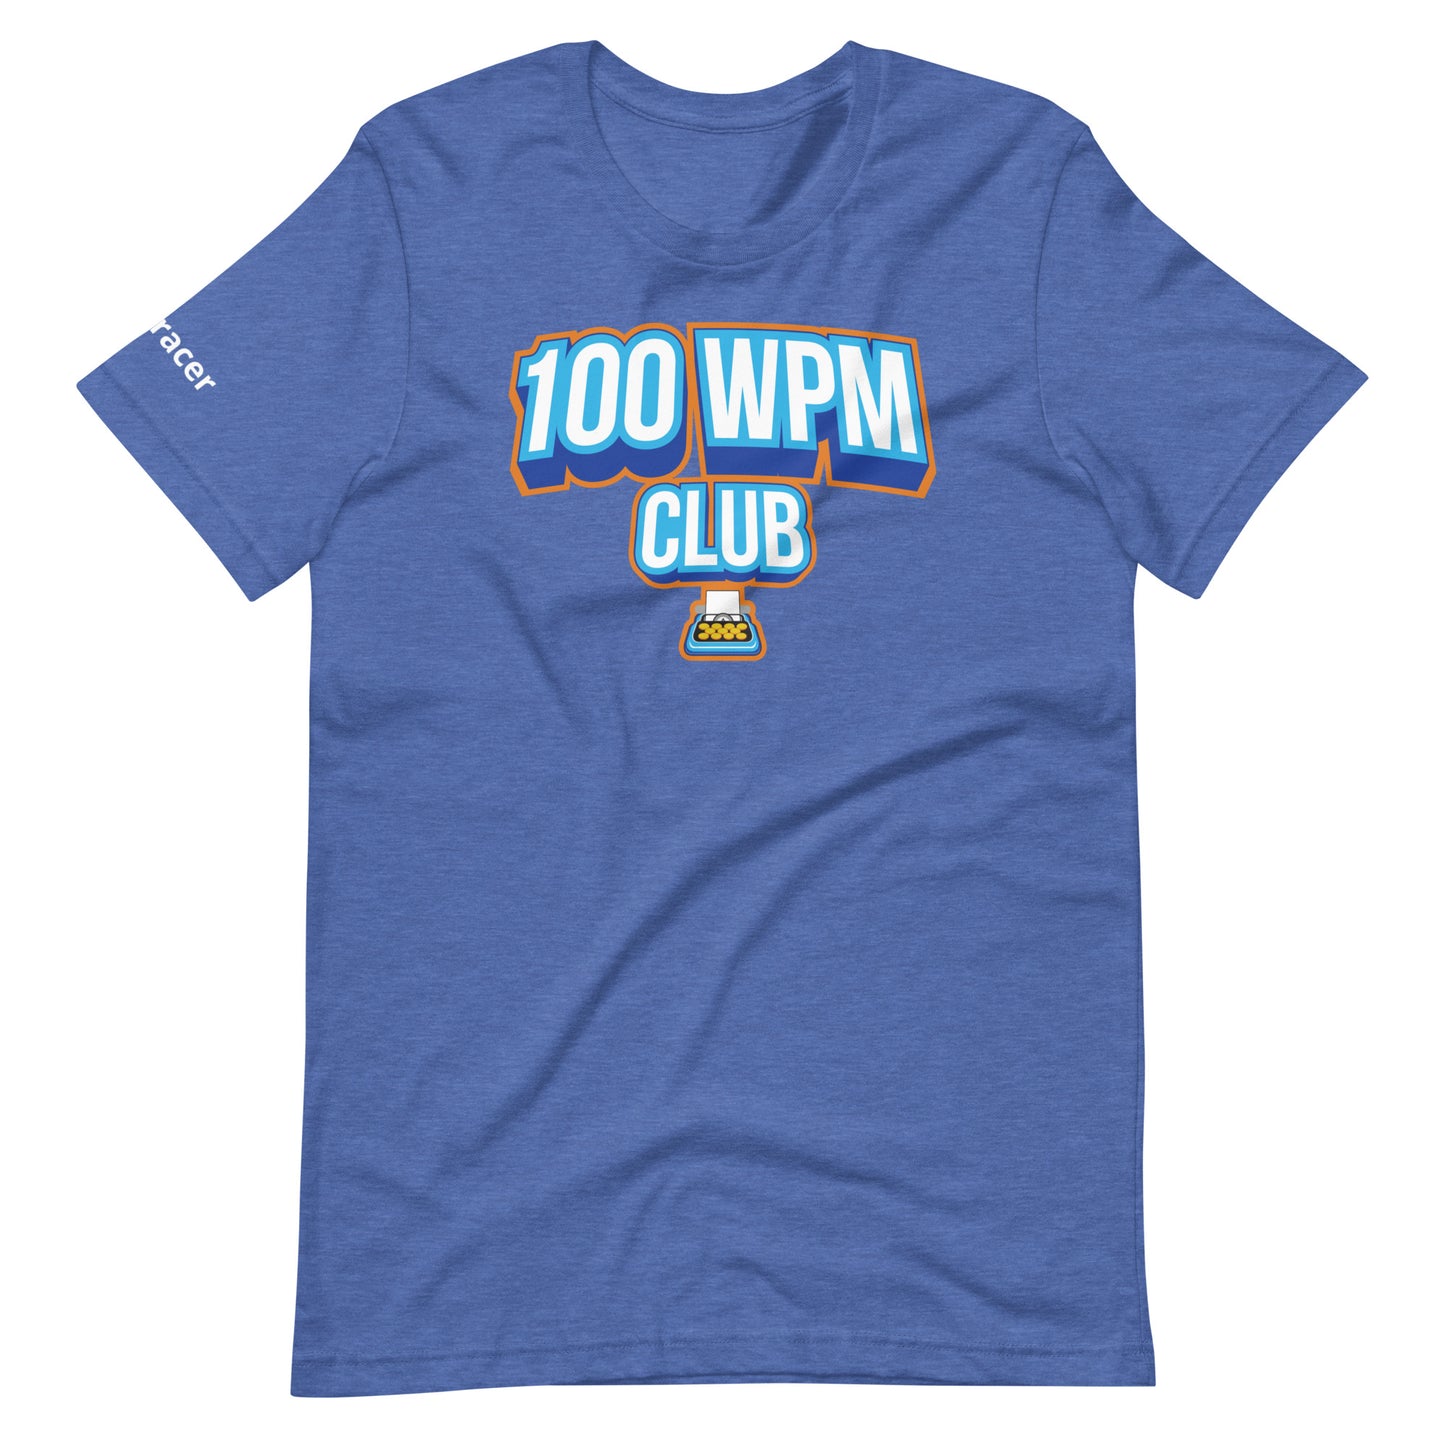 Typeracer 100WPM club unisex t-shirt